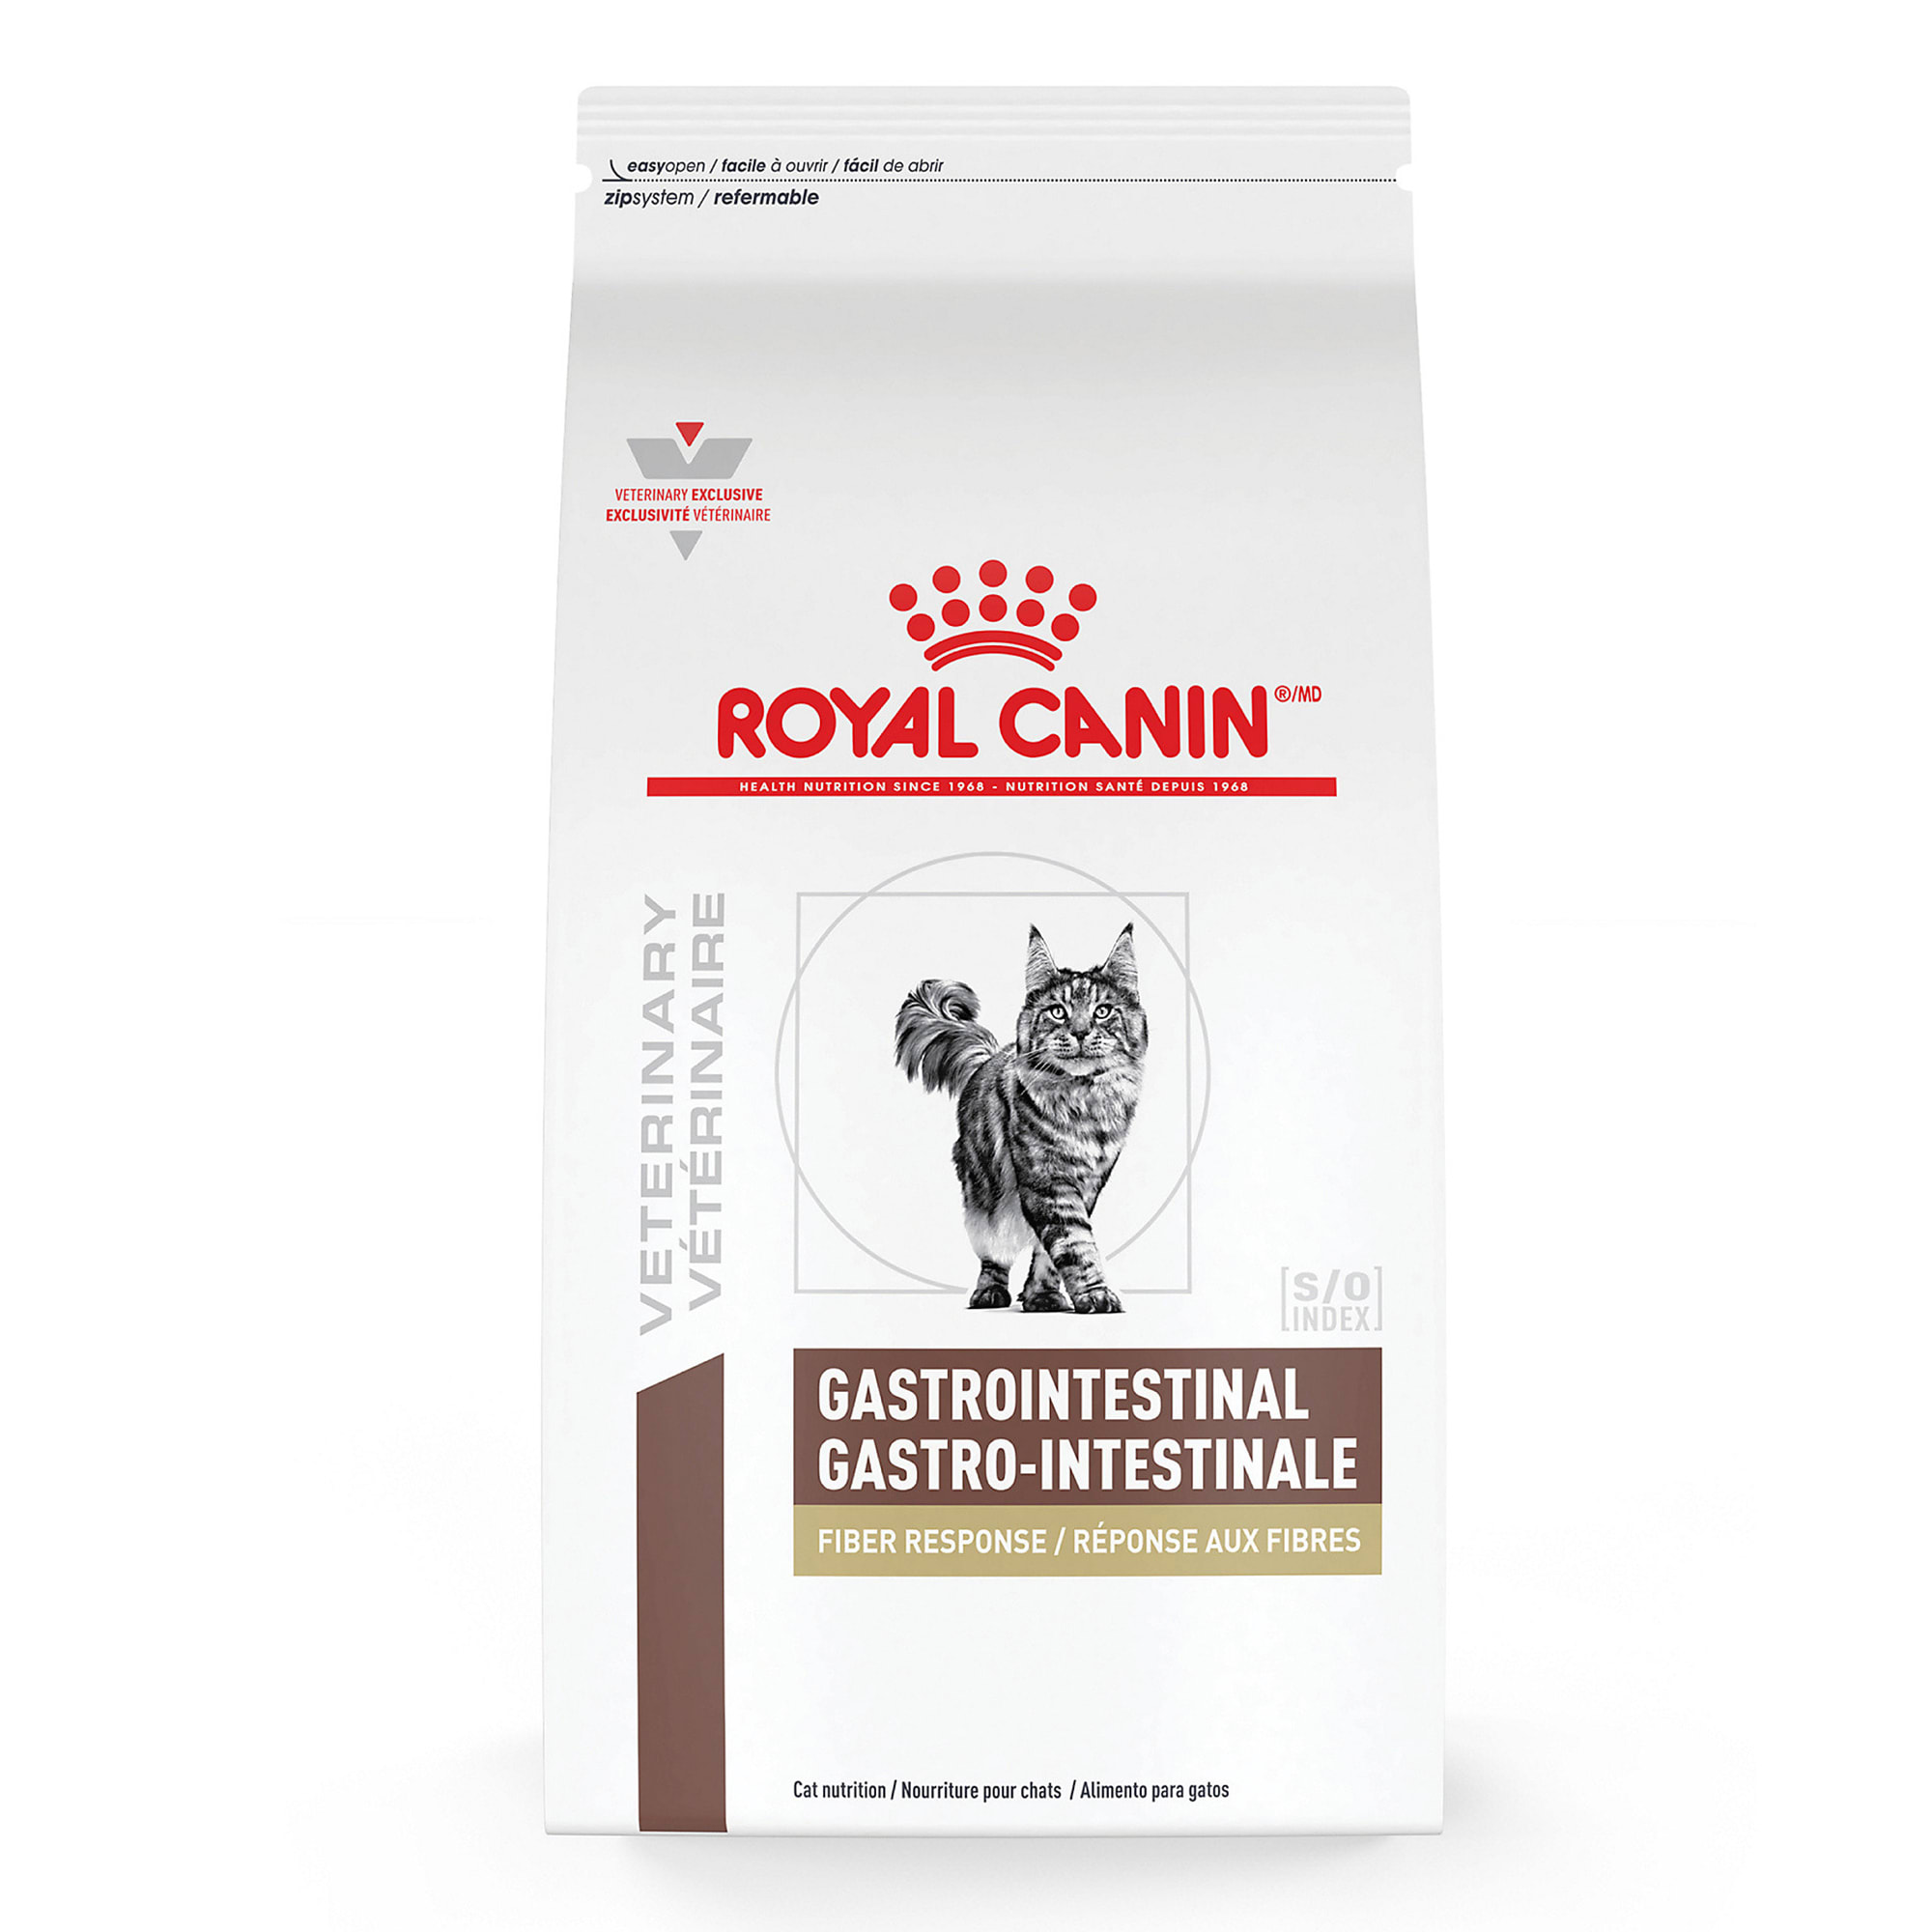 Royal canin gastrointestinal fiber для кошек